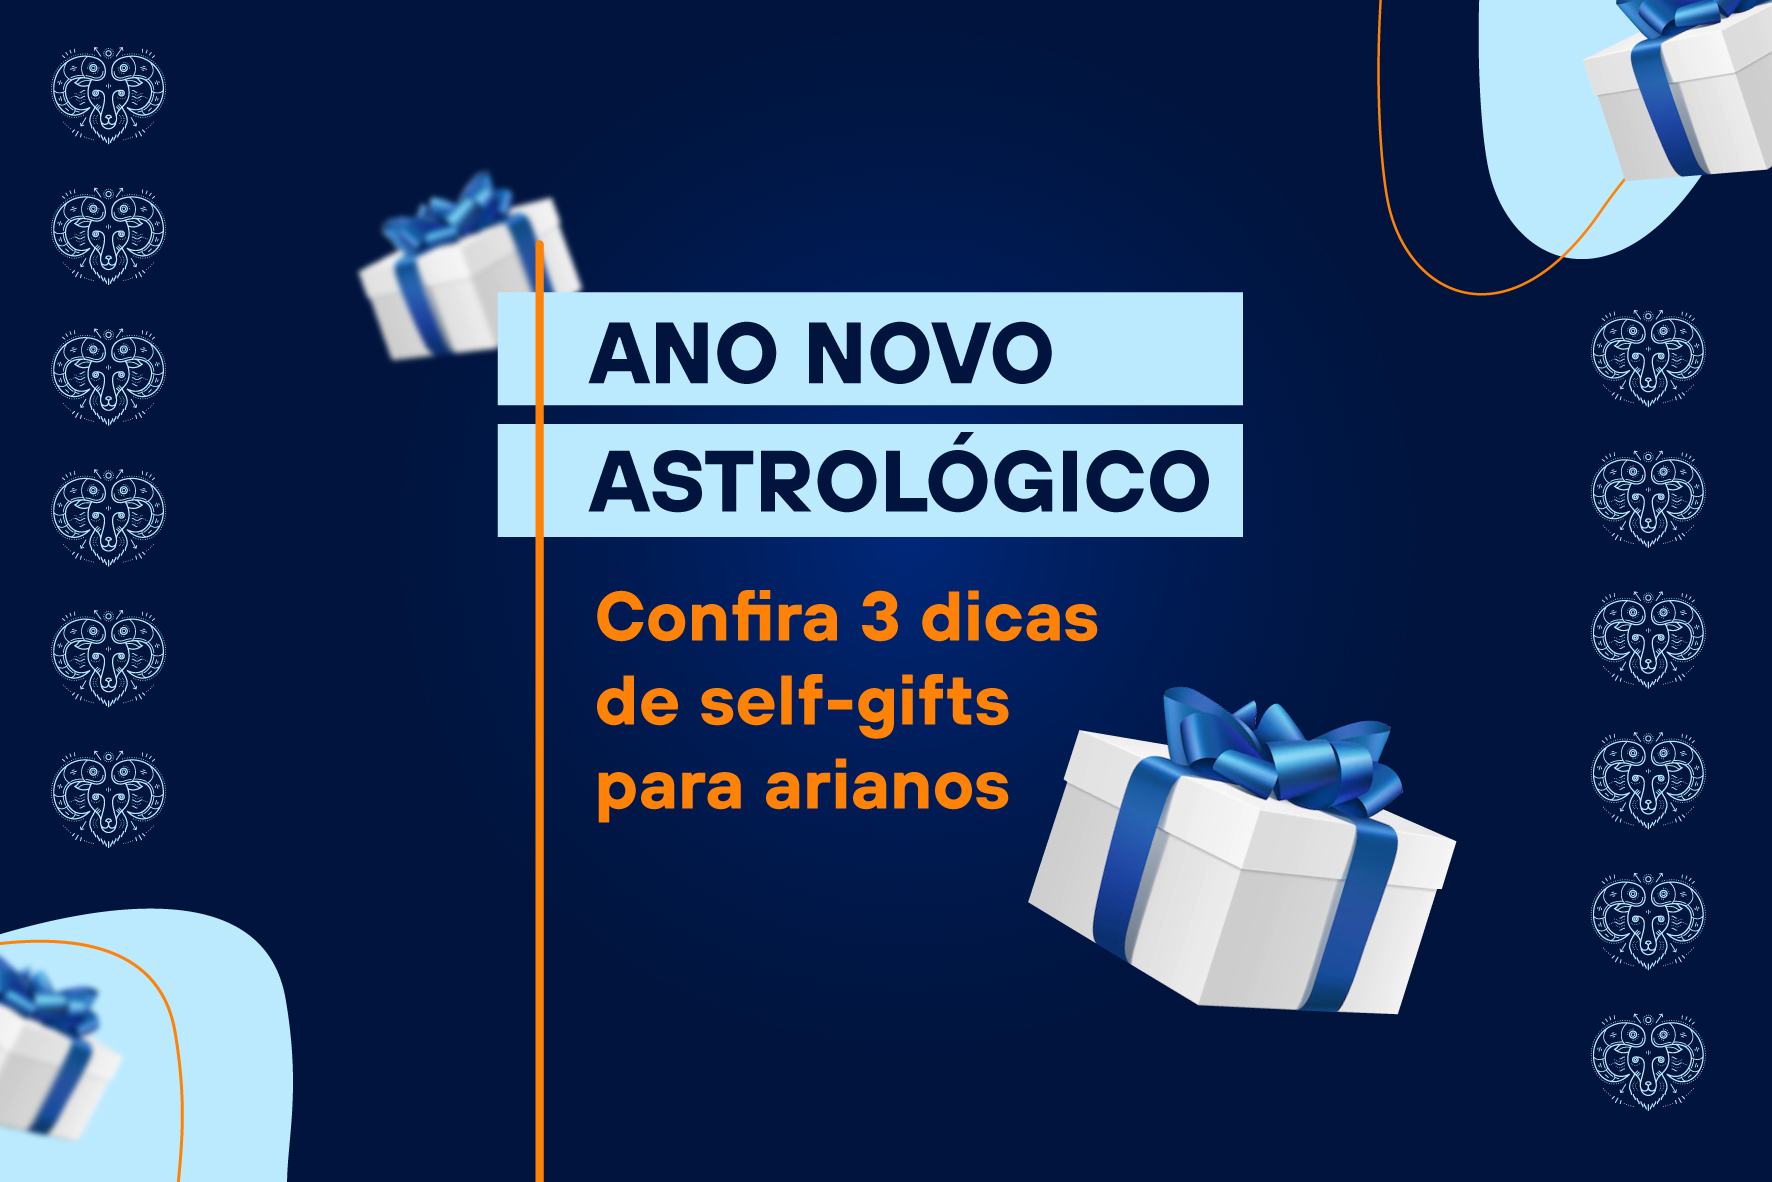 ano-novo-astrologico-webcontinental-blog